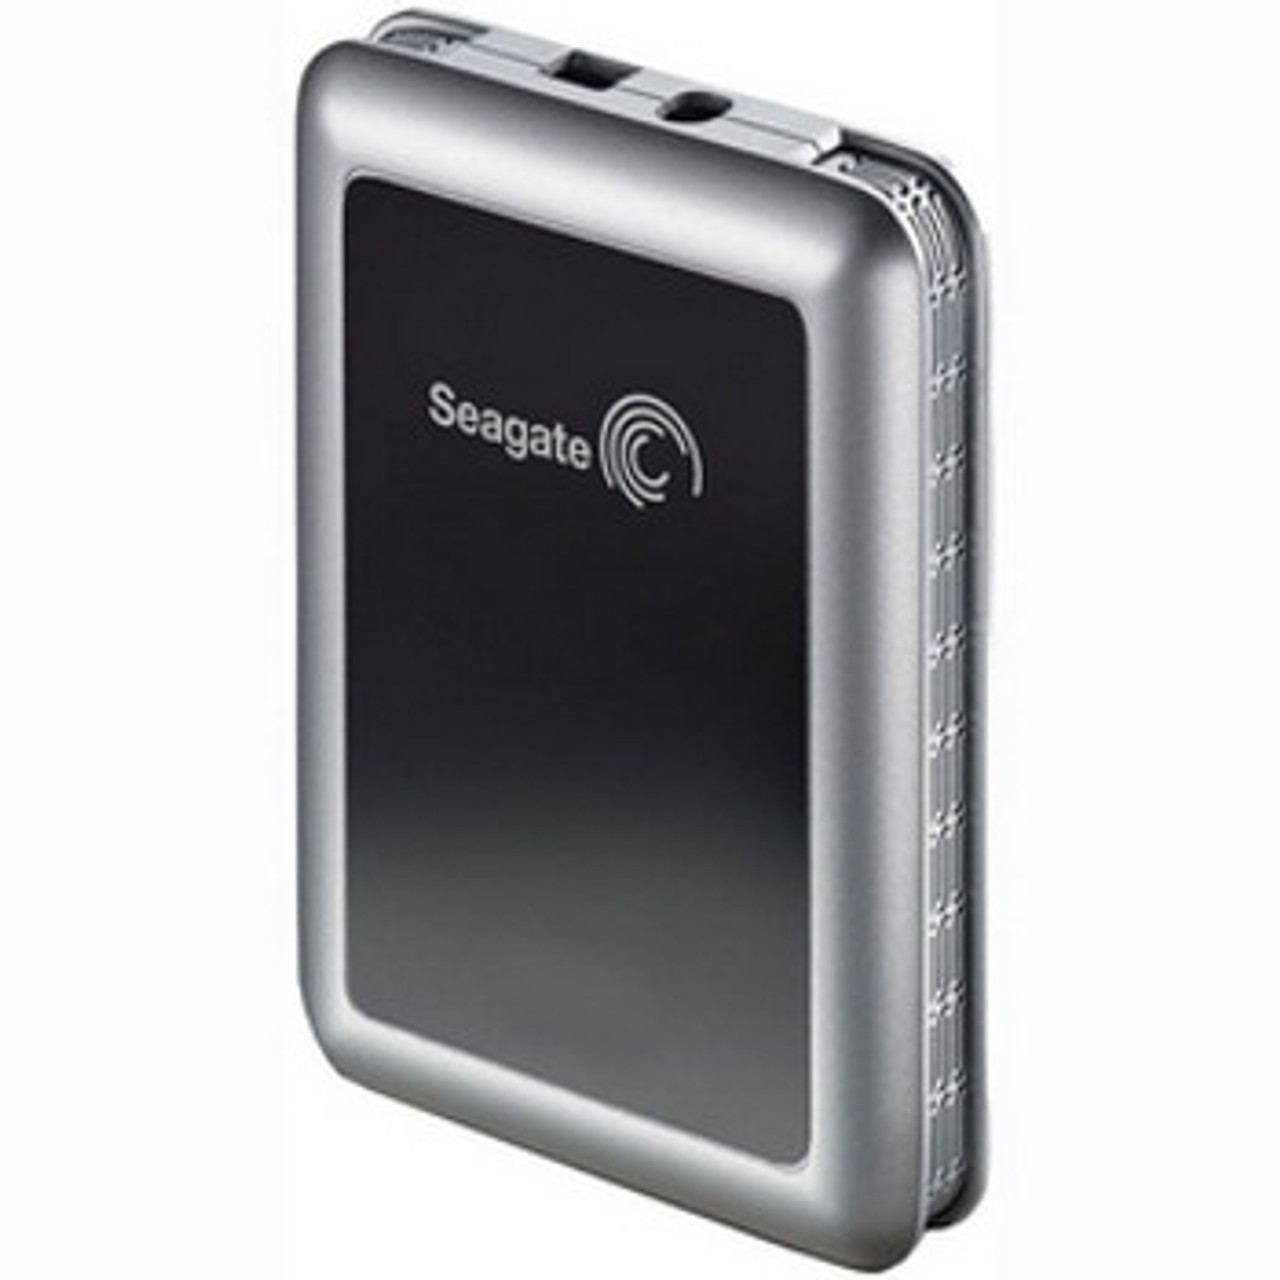 ST305004FDA1E1-R | Seagate | 500GB 7200RPM USB 2.0 External Hard Drive